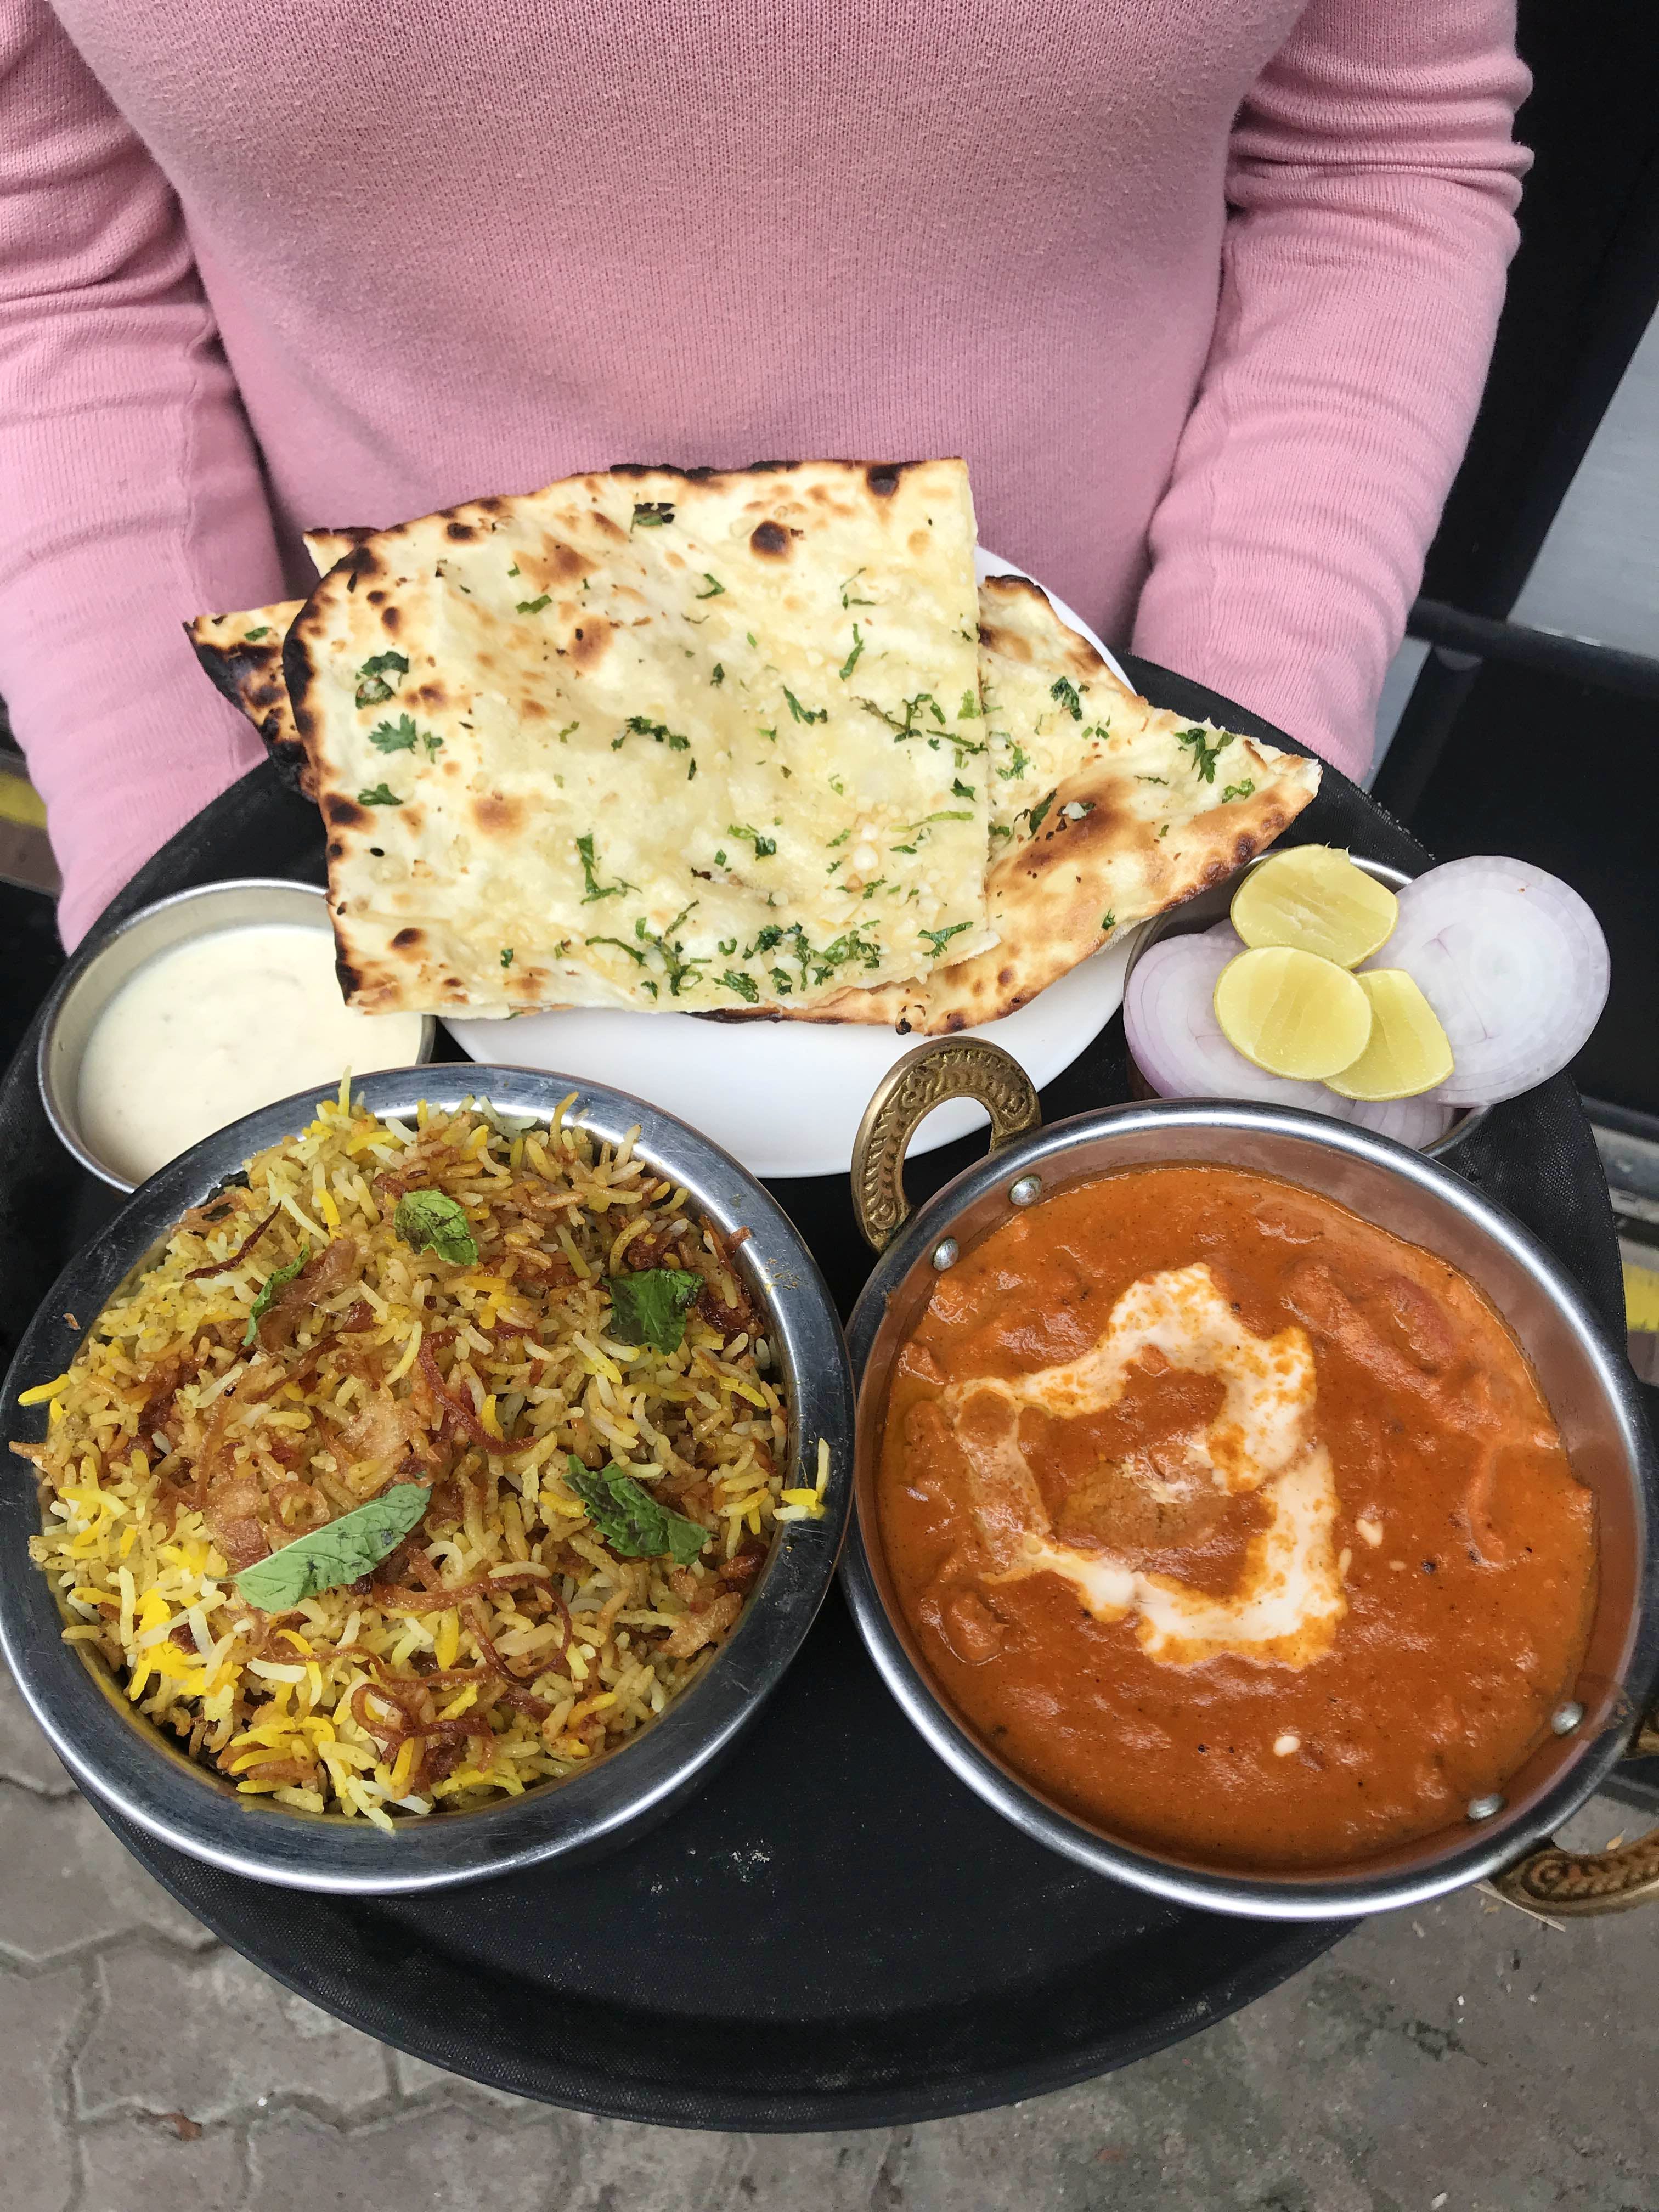 Dish,Food,Cuisine,Ingredient,Naan,Curry,Produce,Indian cuisine,Recipe,Punjabi cuisine